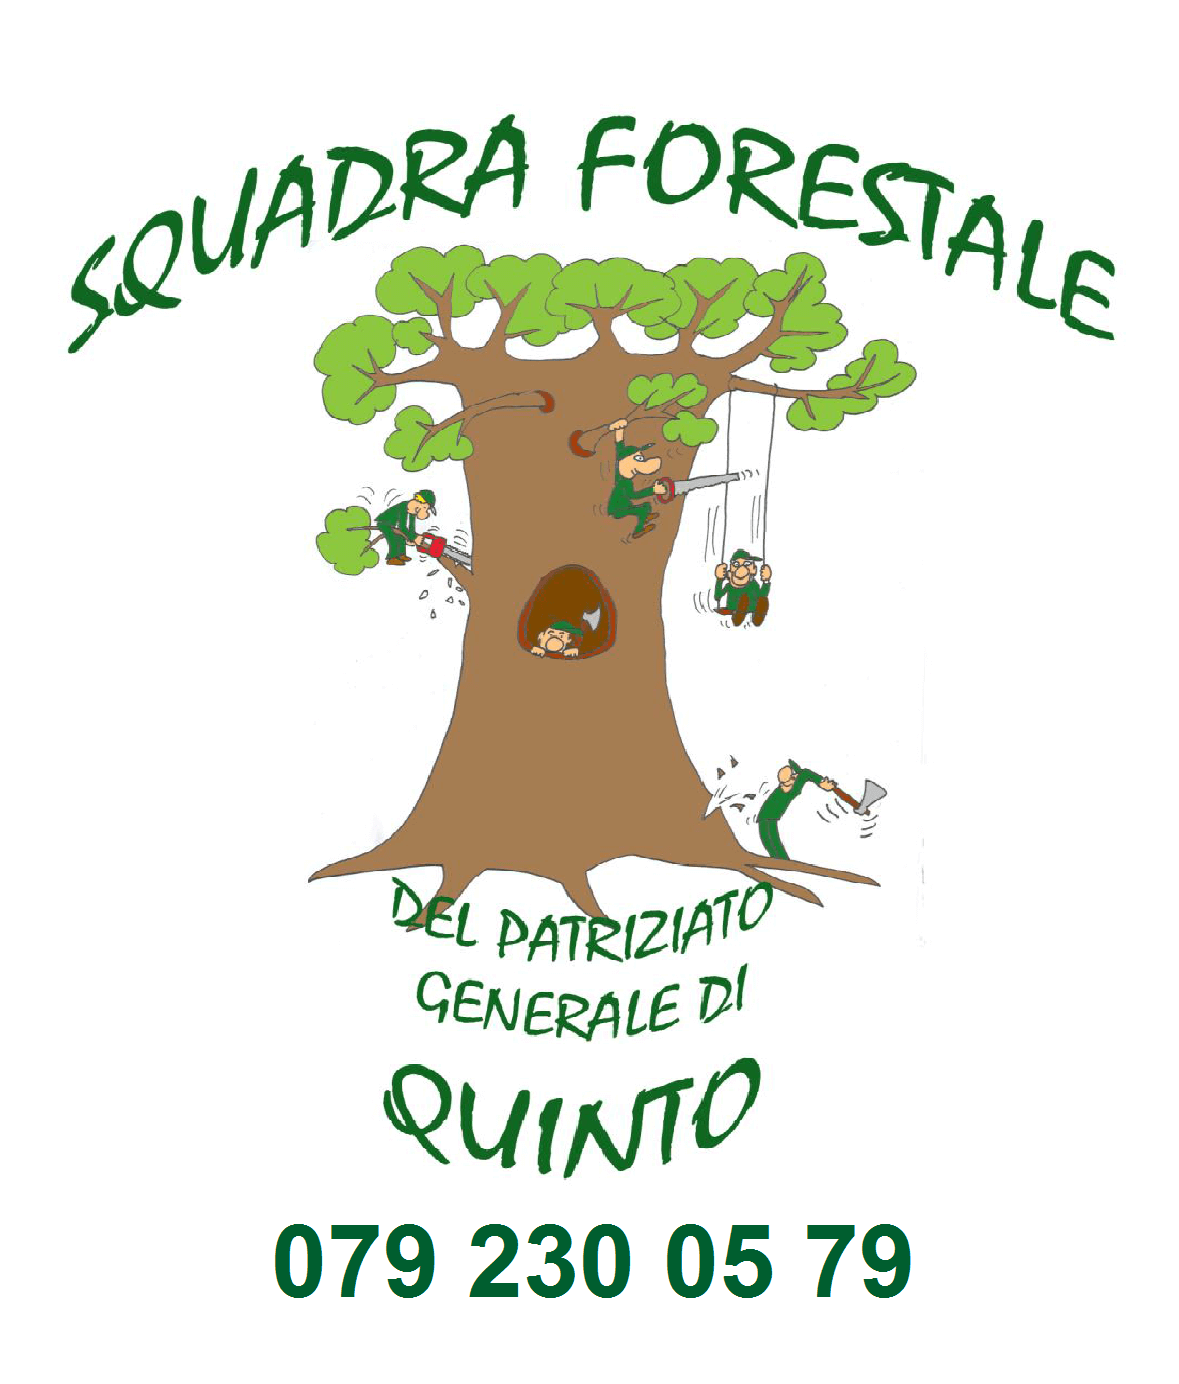 Summer Carnival: Logo sponsor Squadra forestale Quinto